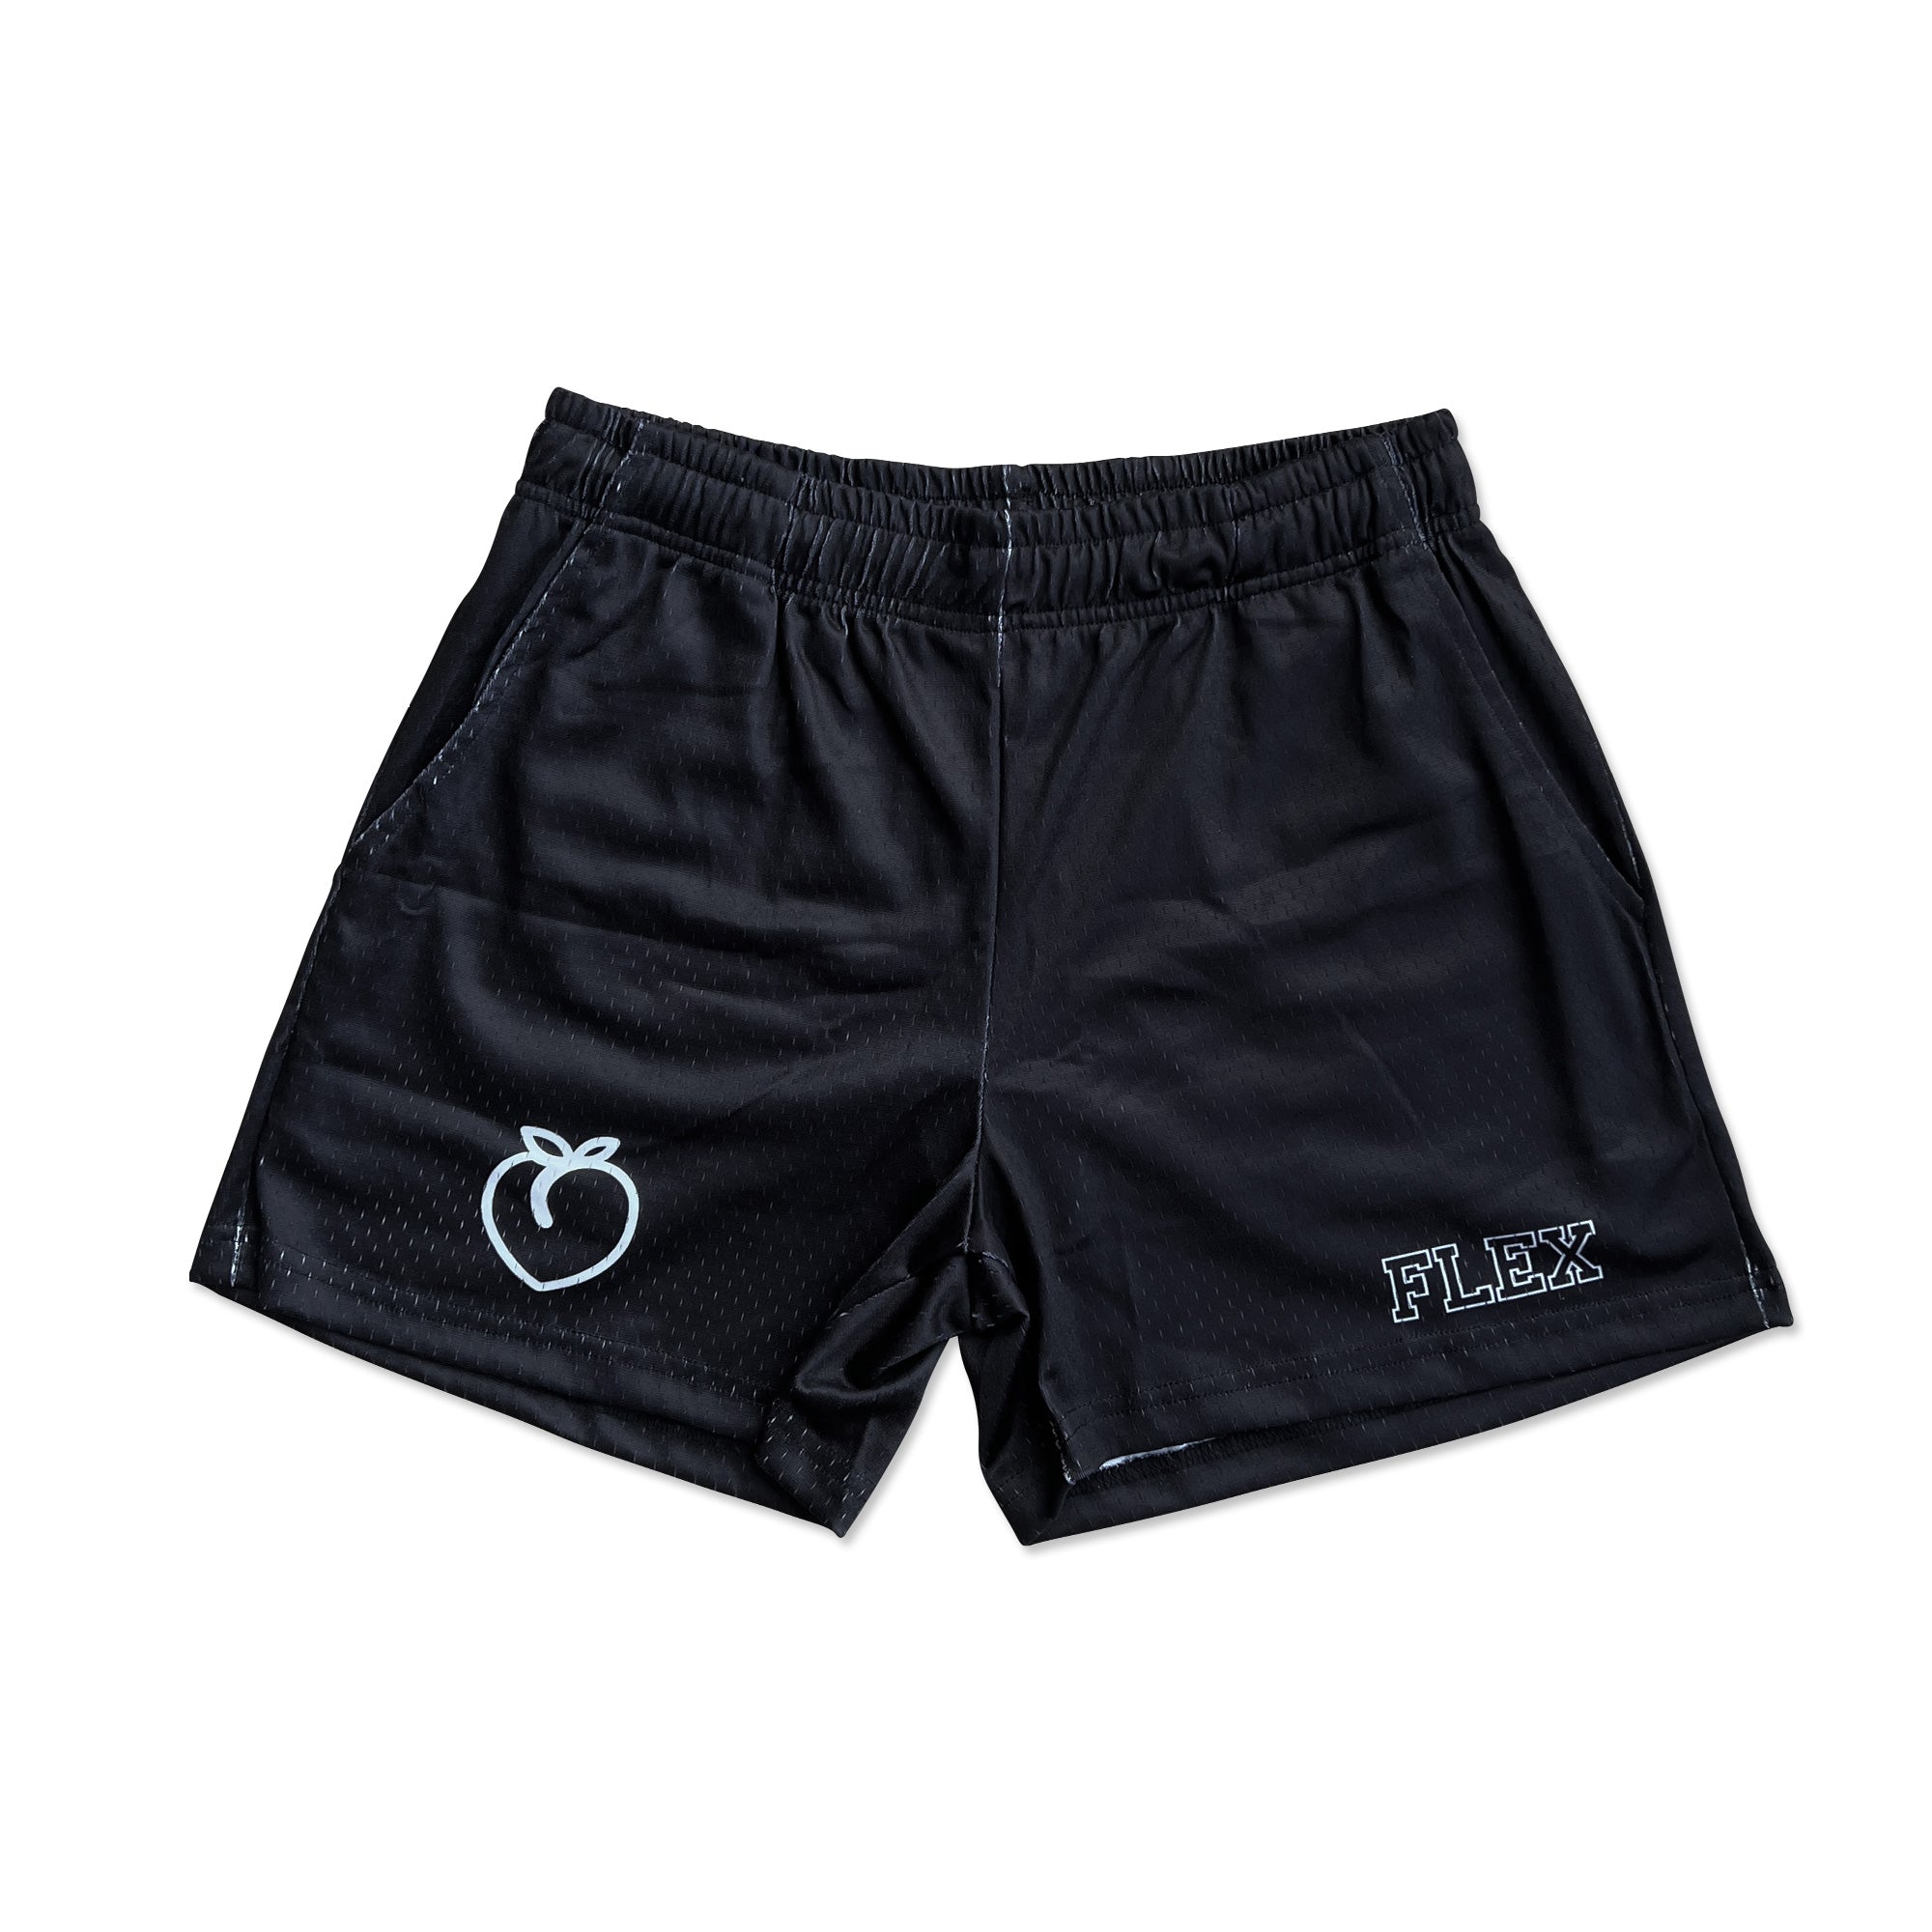 Men's Shorts – Flexliving